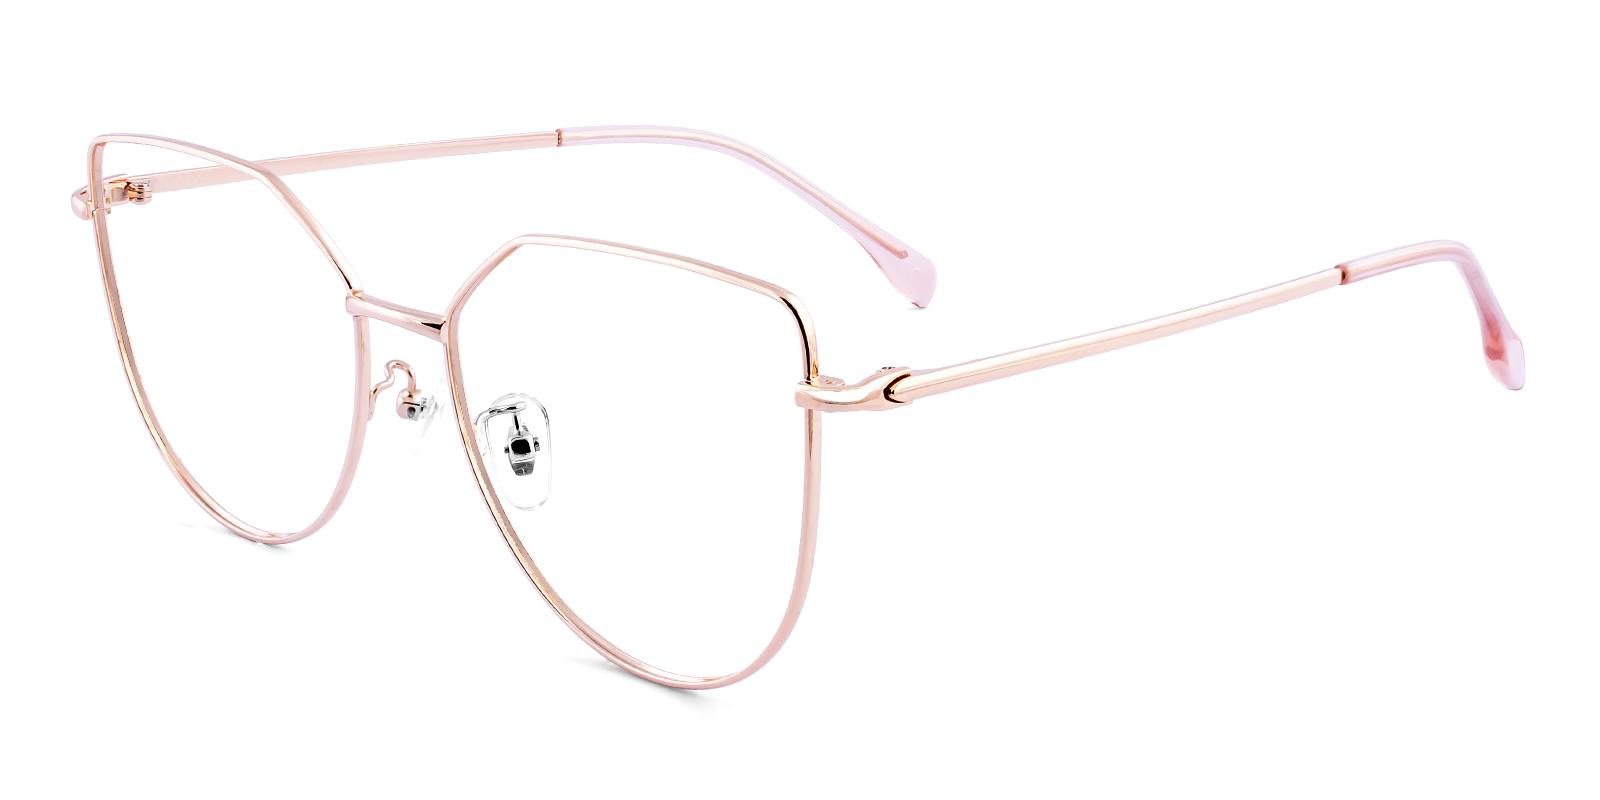 Pastth Rosegold Metal Eyeglasses , NosePads Frames from ABBE Glasses